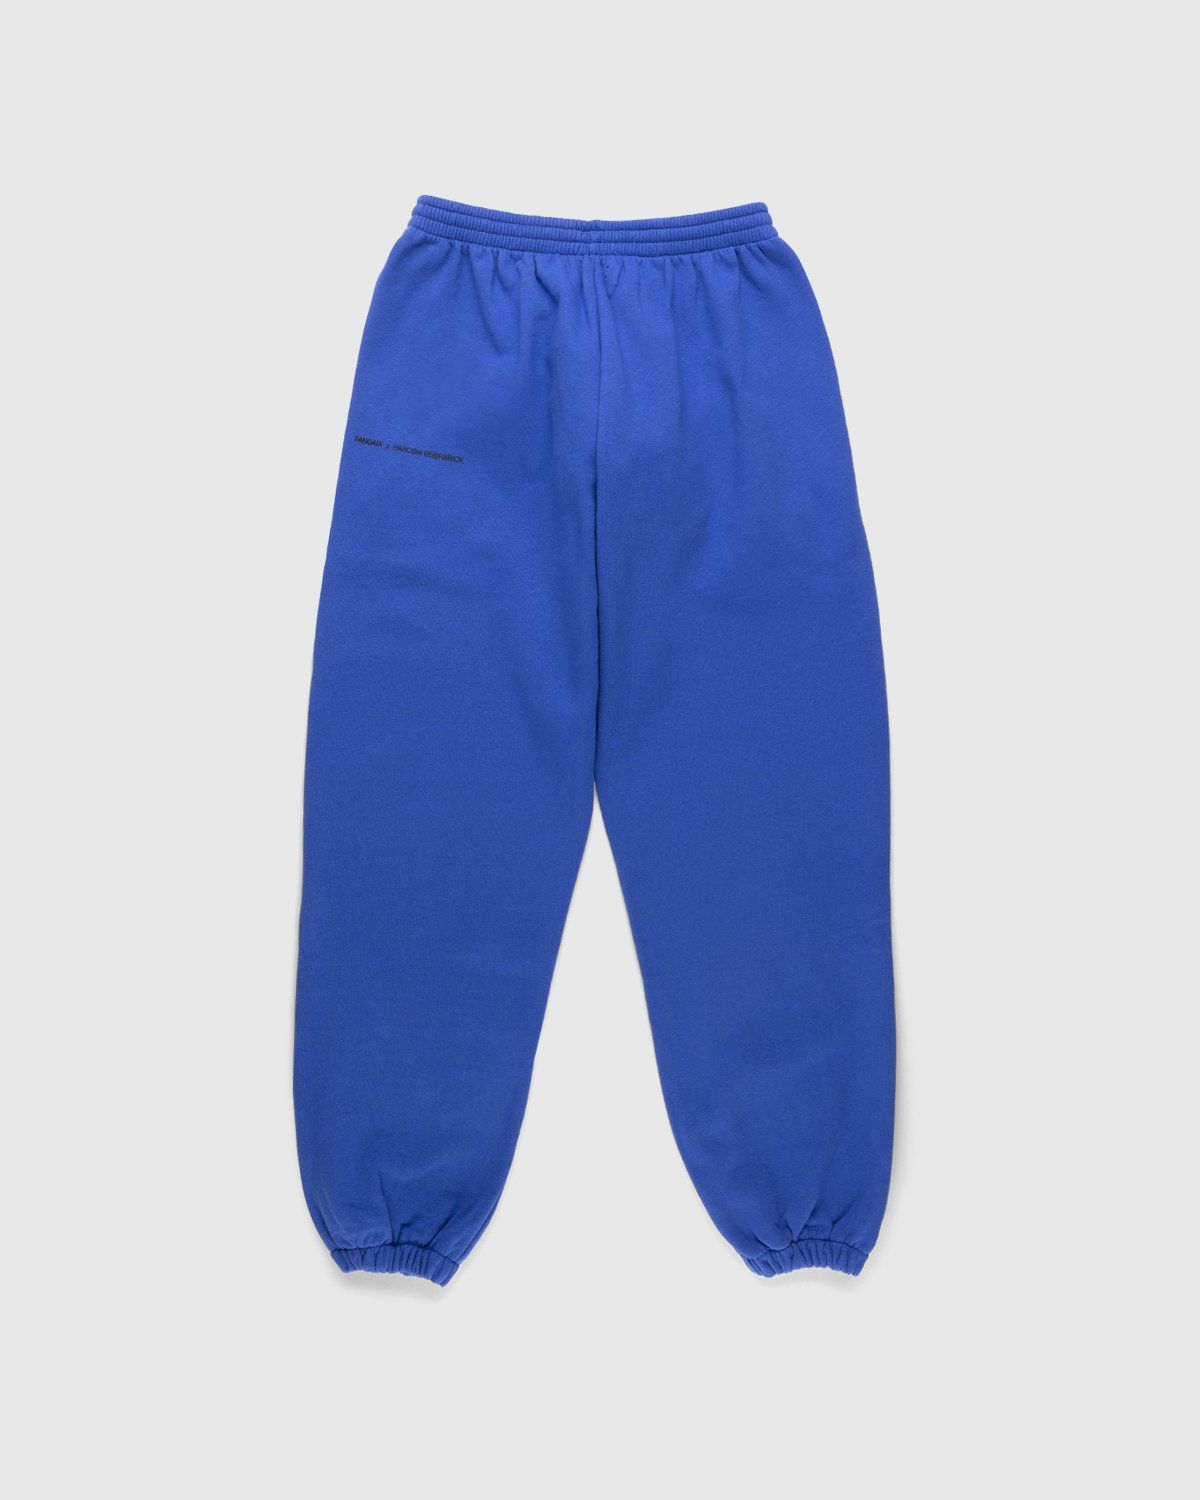 Pangaia x Haroshi – Be@rbrick Recycled Cotton Track Pants Blue - Track Pants - Blue - Image 2